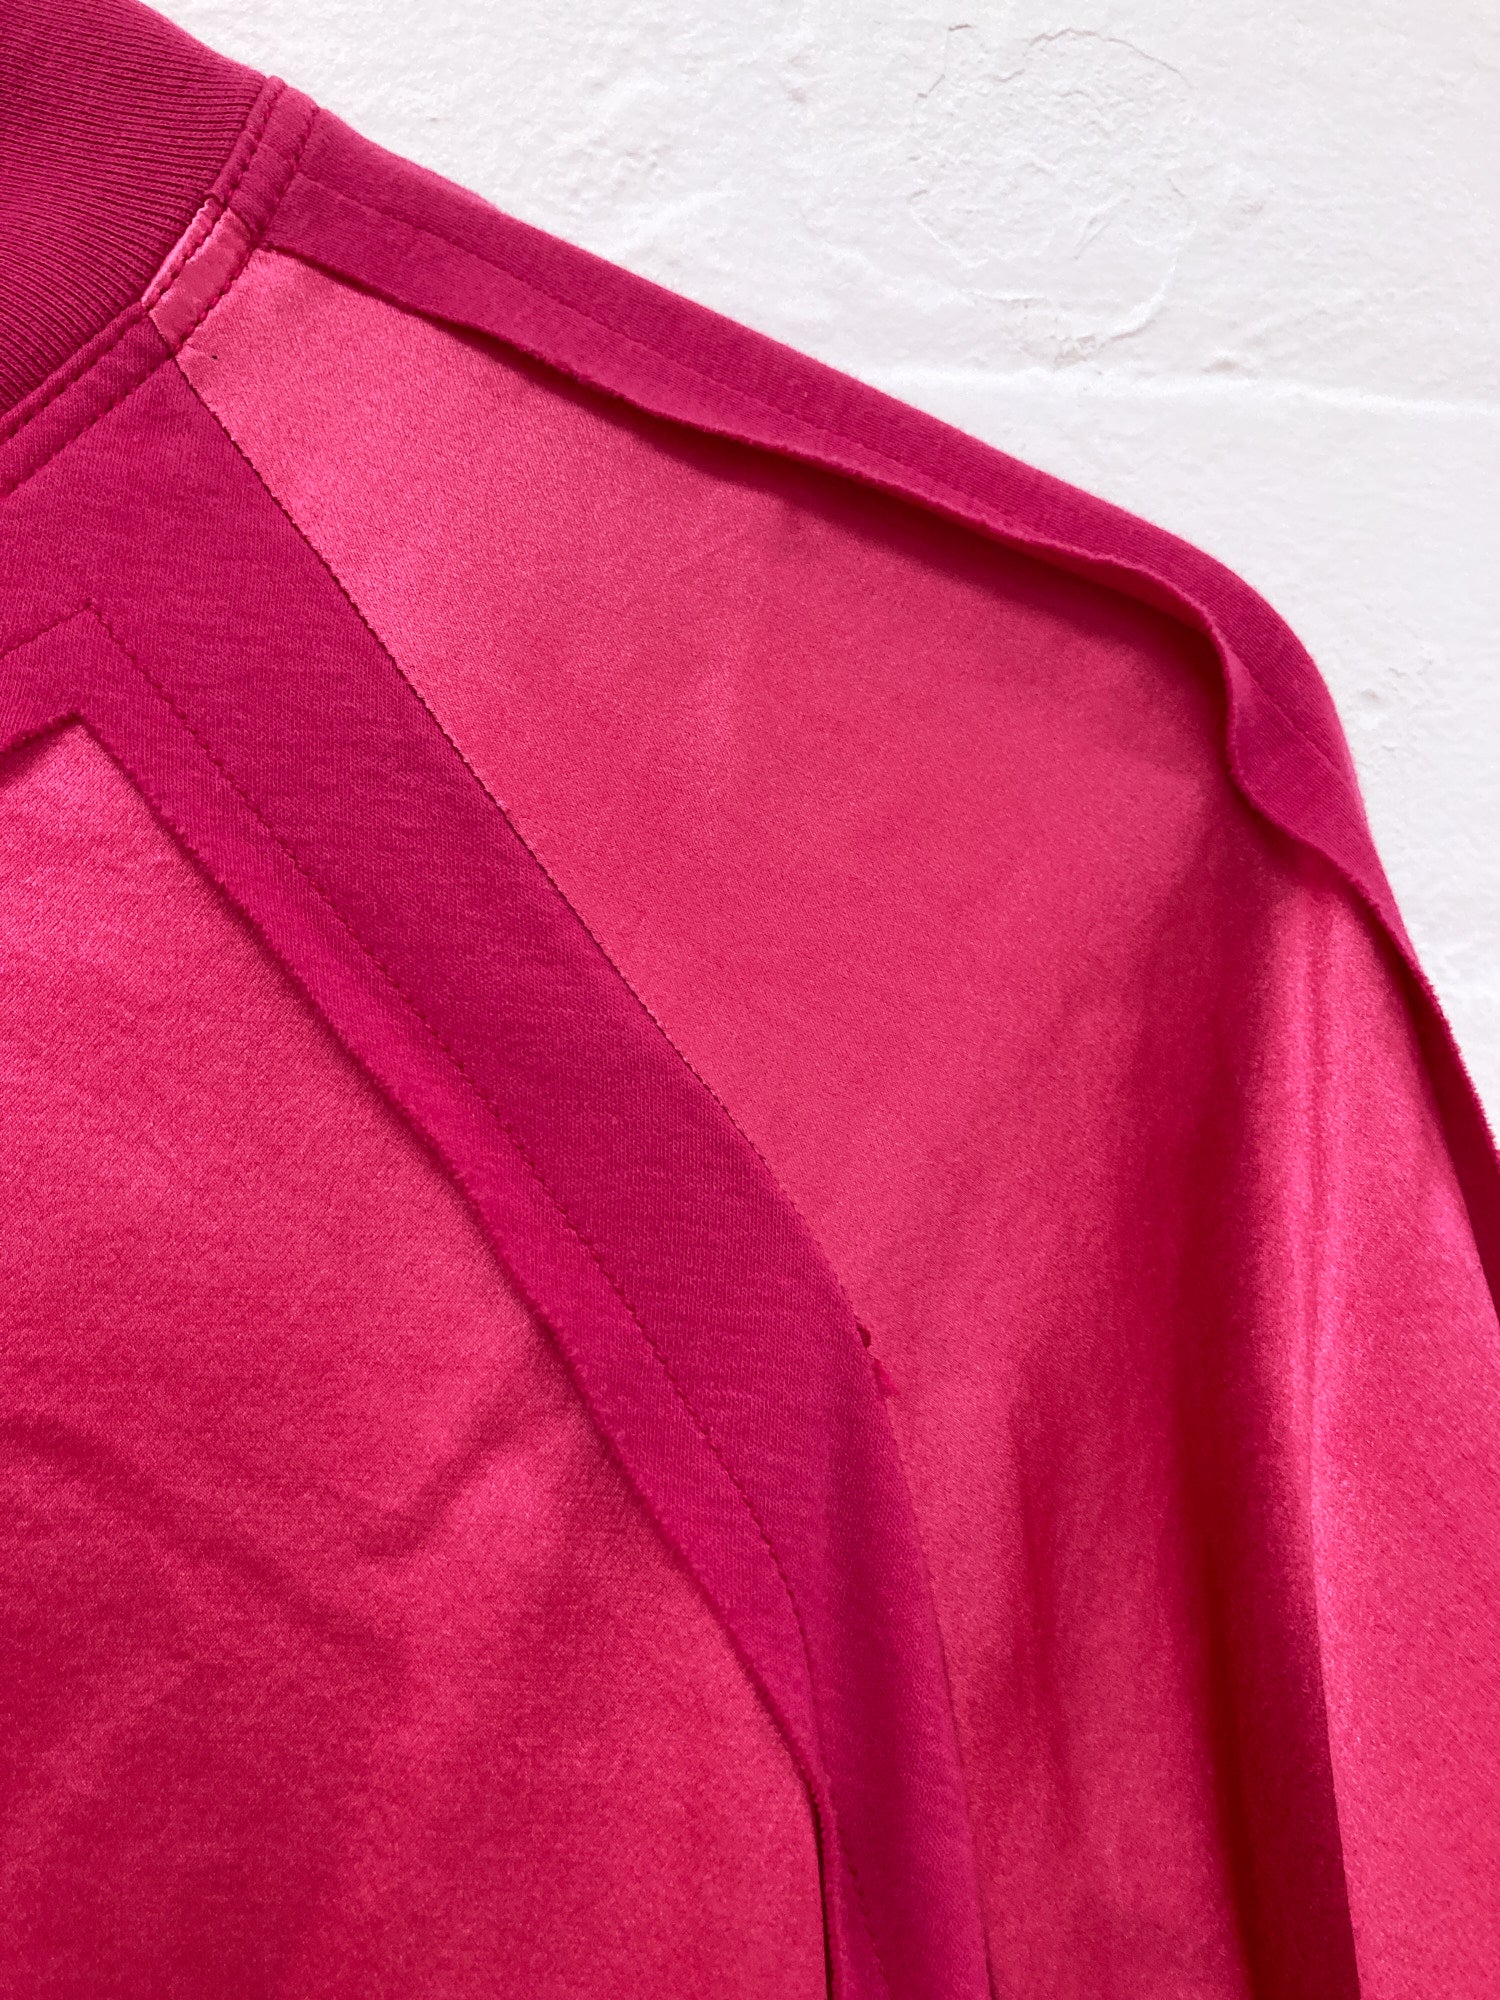 Martine Sitbon fuschia pink silk and cotton jersey zip jacket - size 38